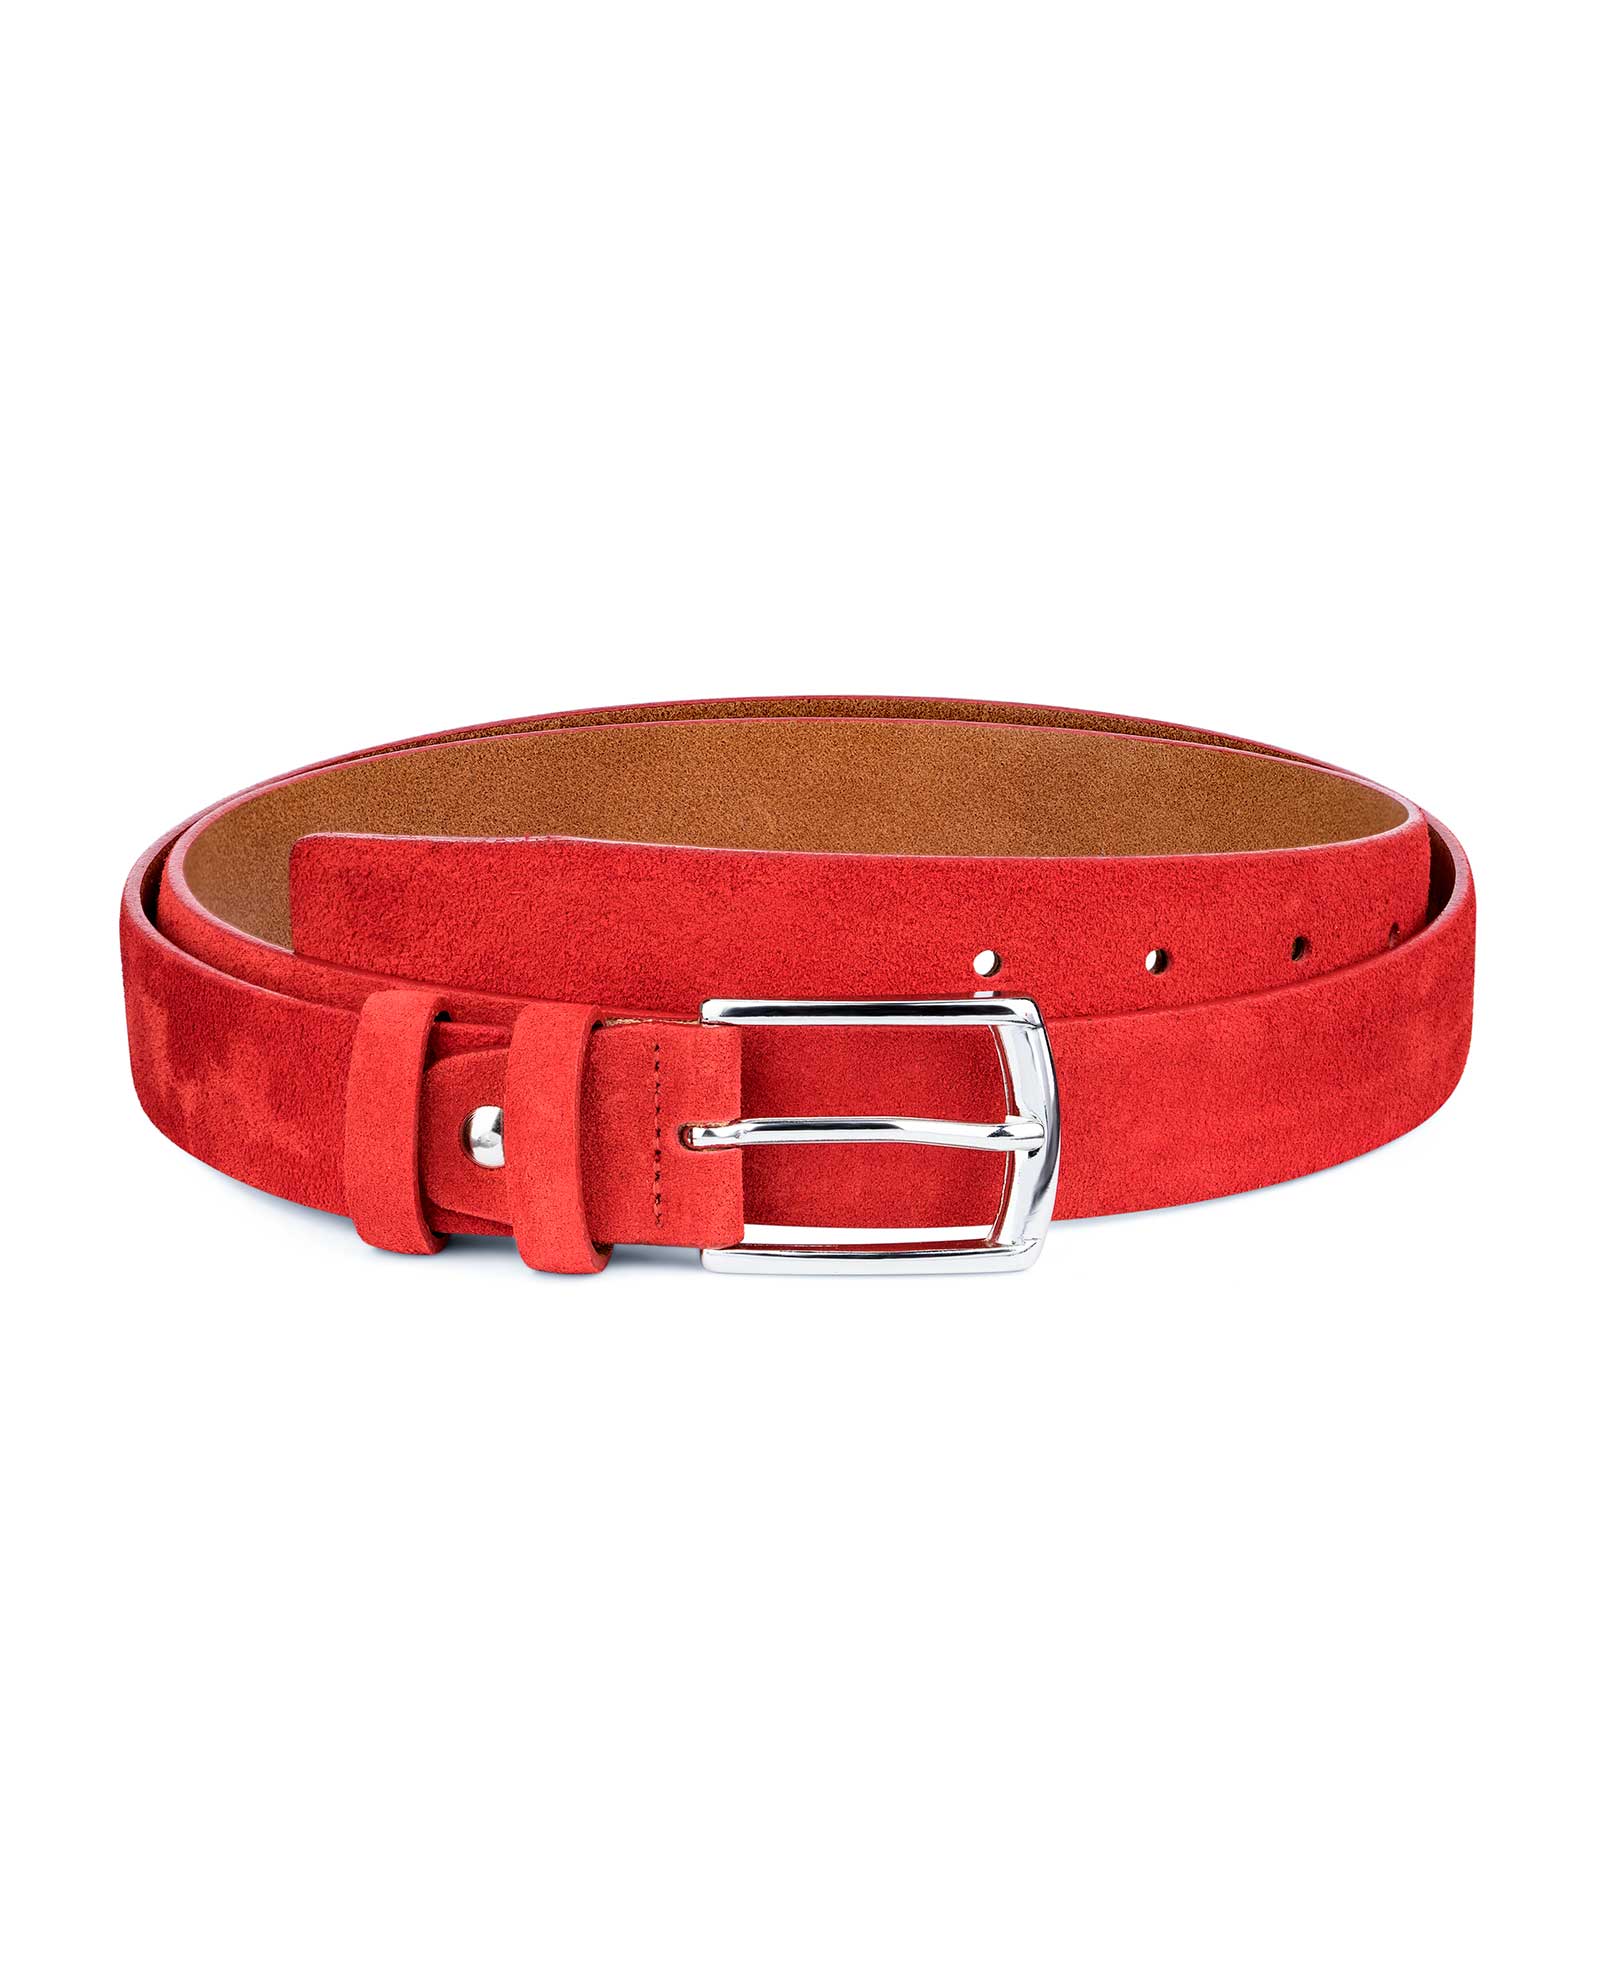 Buy Red Suede Leather Belt in 1 1/8 inch | LeatherBeltsOnline.com